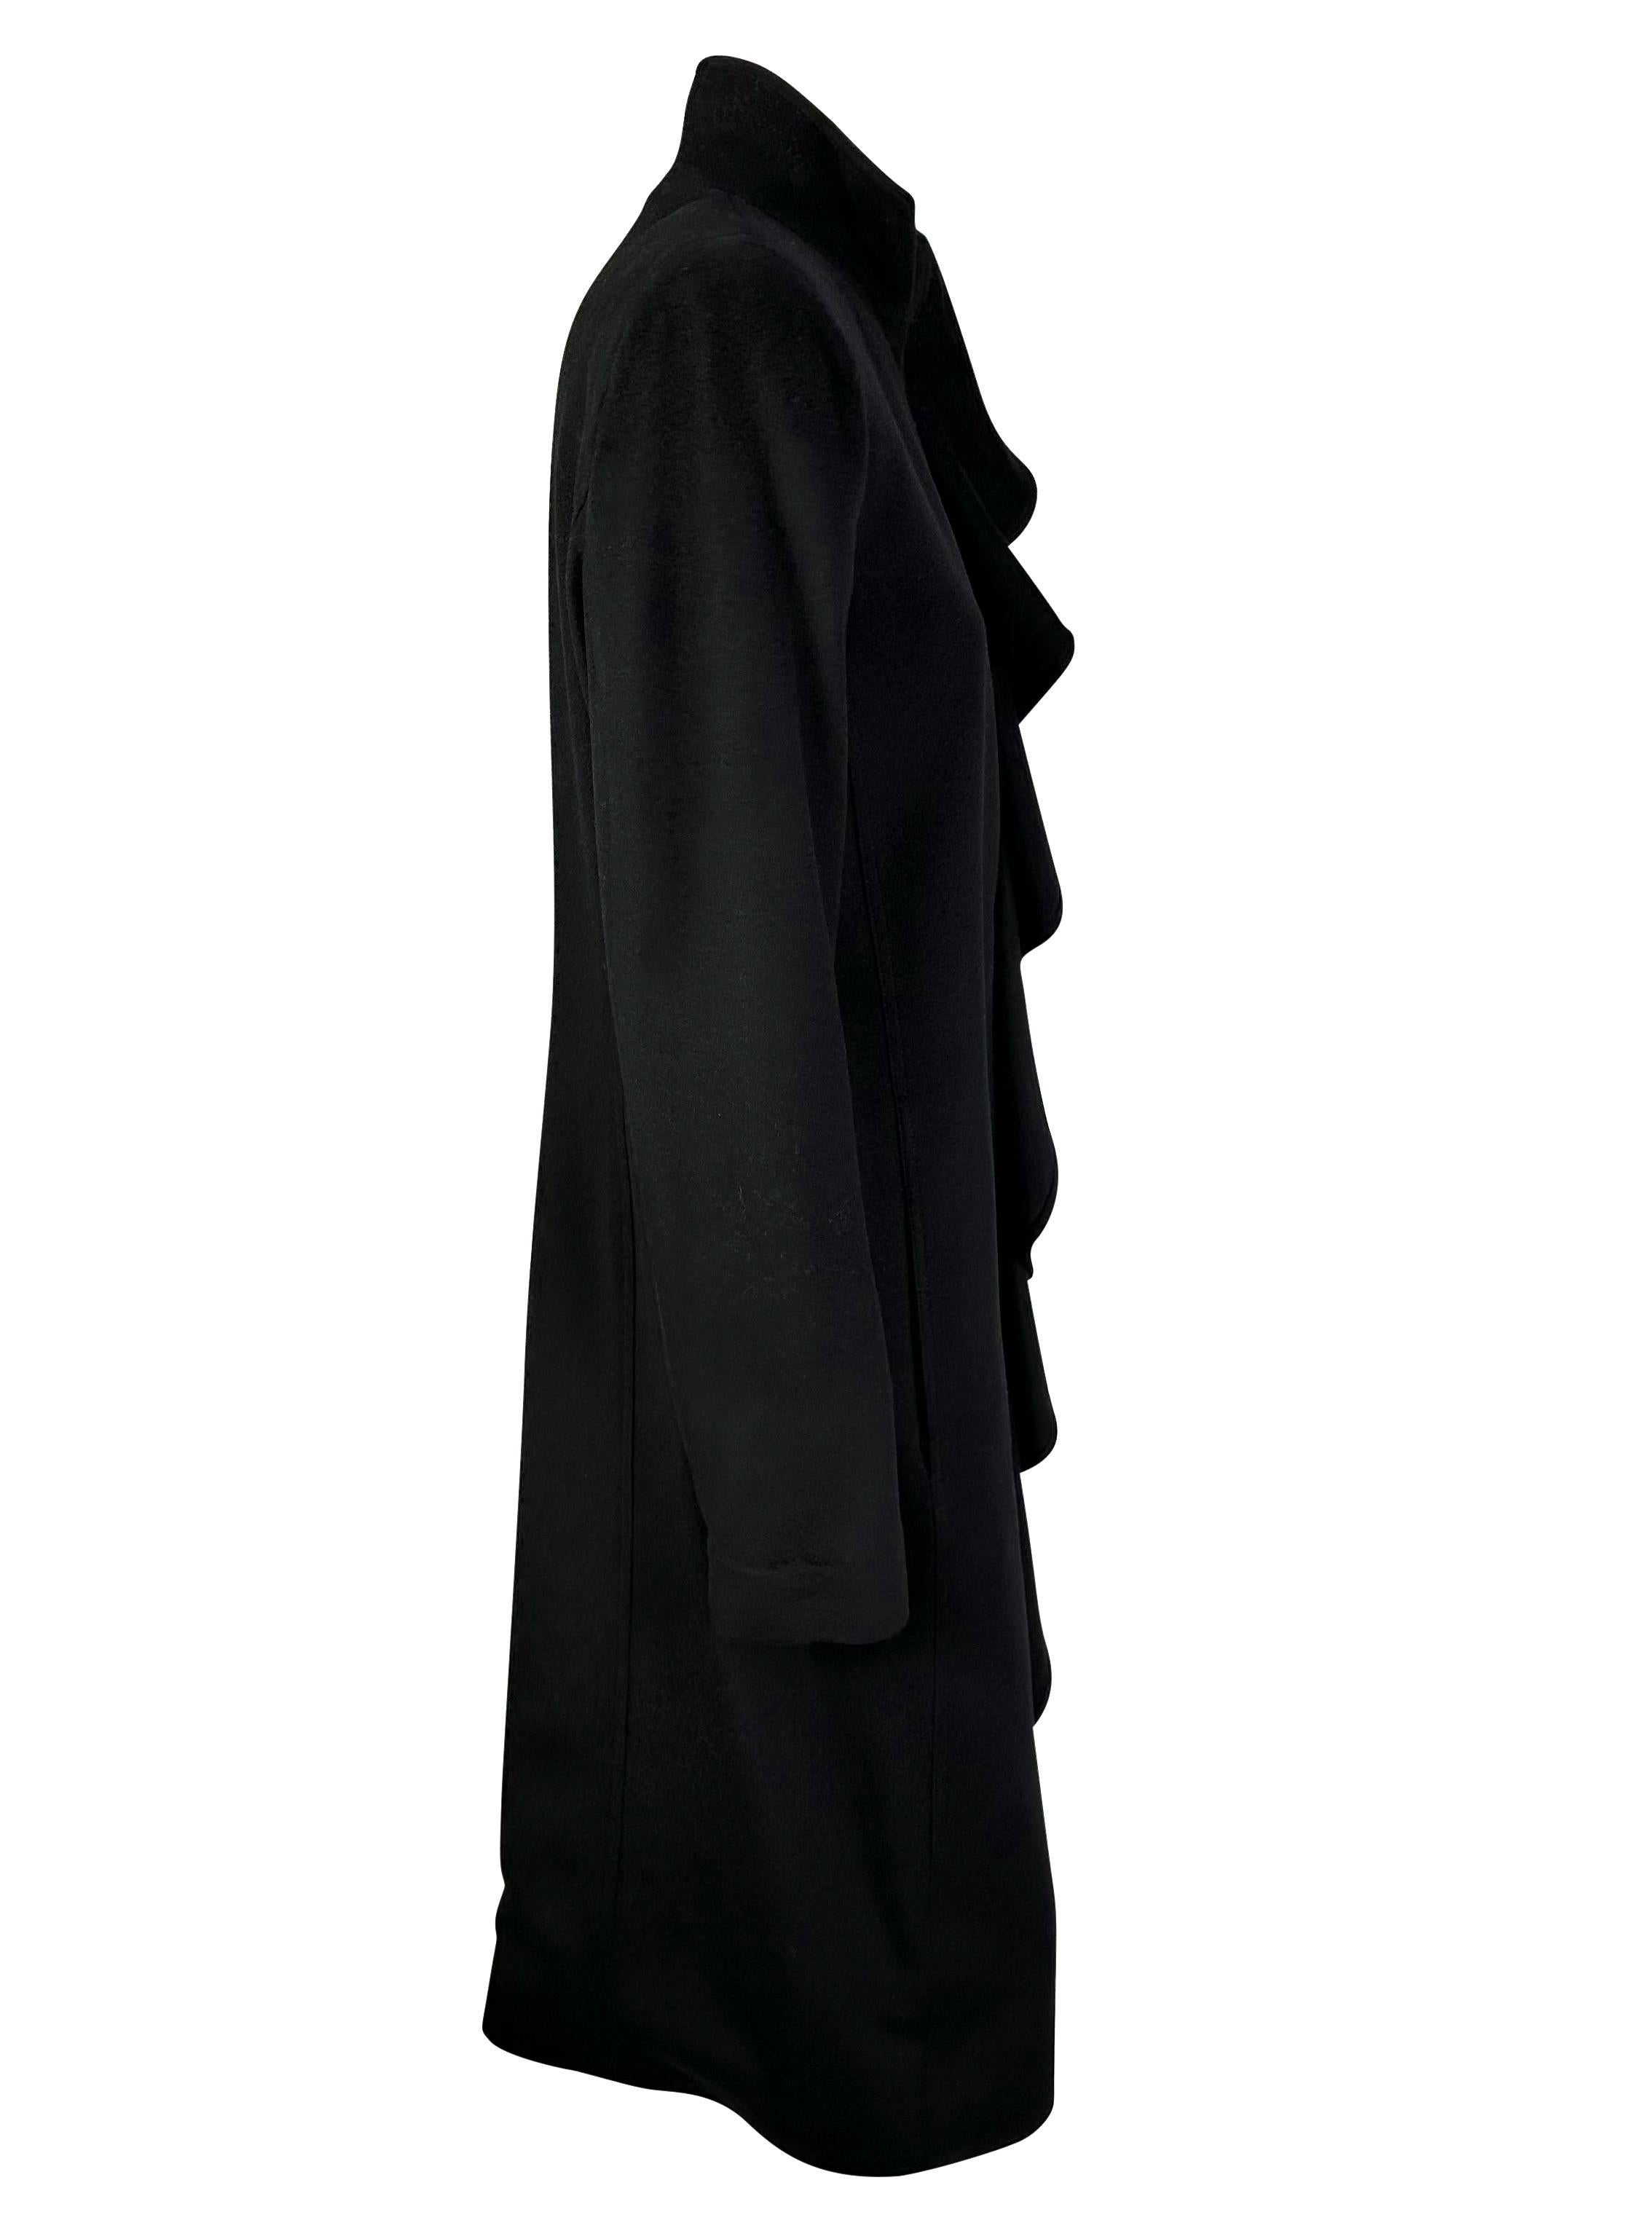 F/W 2003 Yves Saint Laurent by Tom Ford Runway Ruffle Overcoat Black For Sale 3